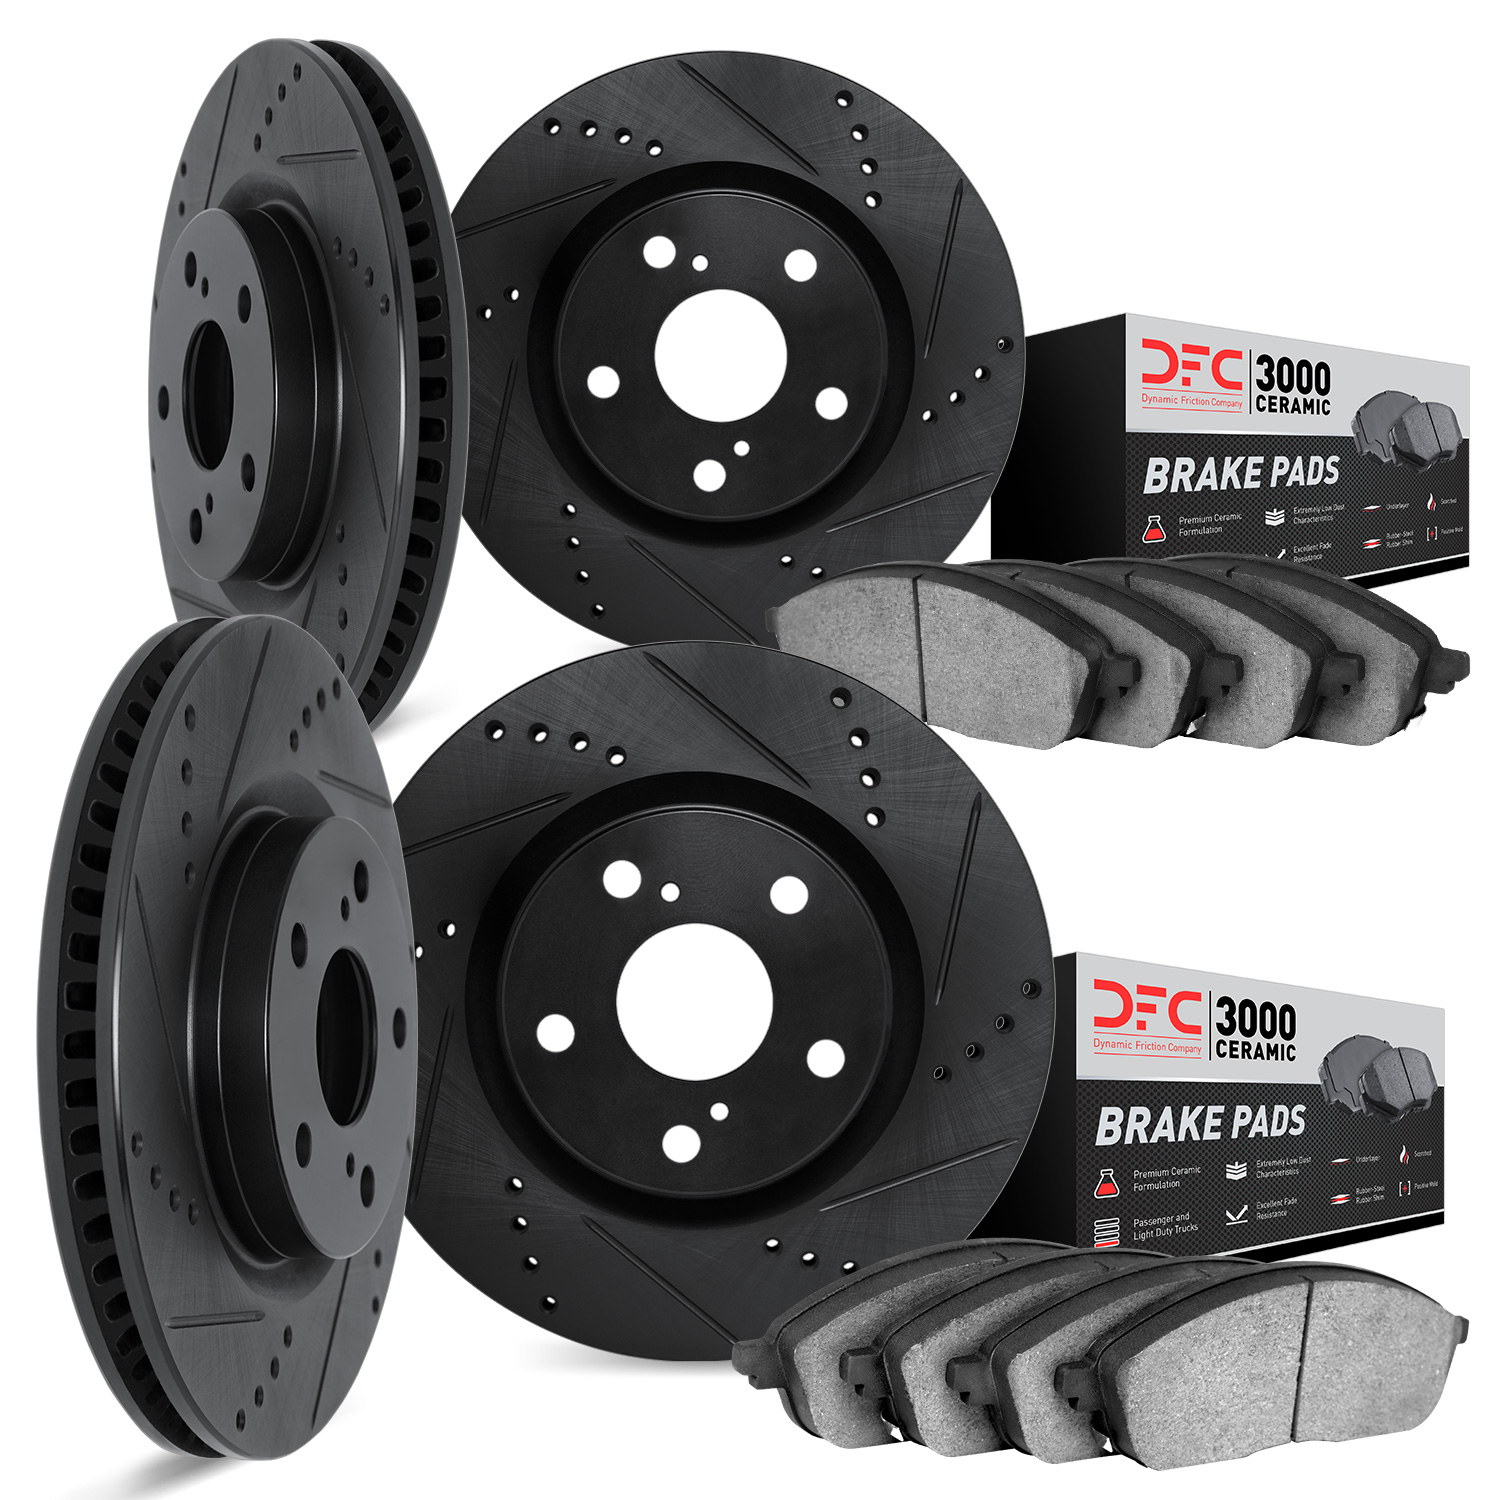 8304-54061 Drilled/Slotted Brake Rotors with 3000-Series Ceramic Brake Pads Kit [Black], 2007-2014 Ford/Lincoln/Mercury/Mazda, P